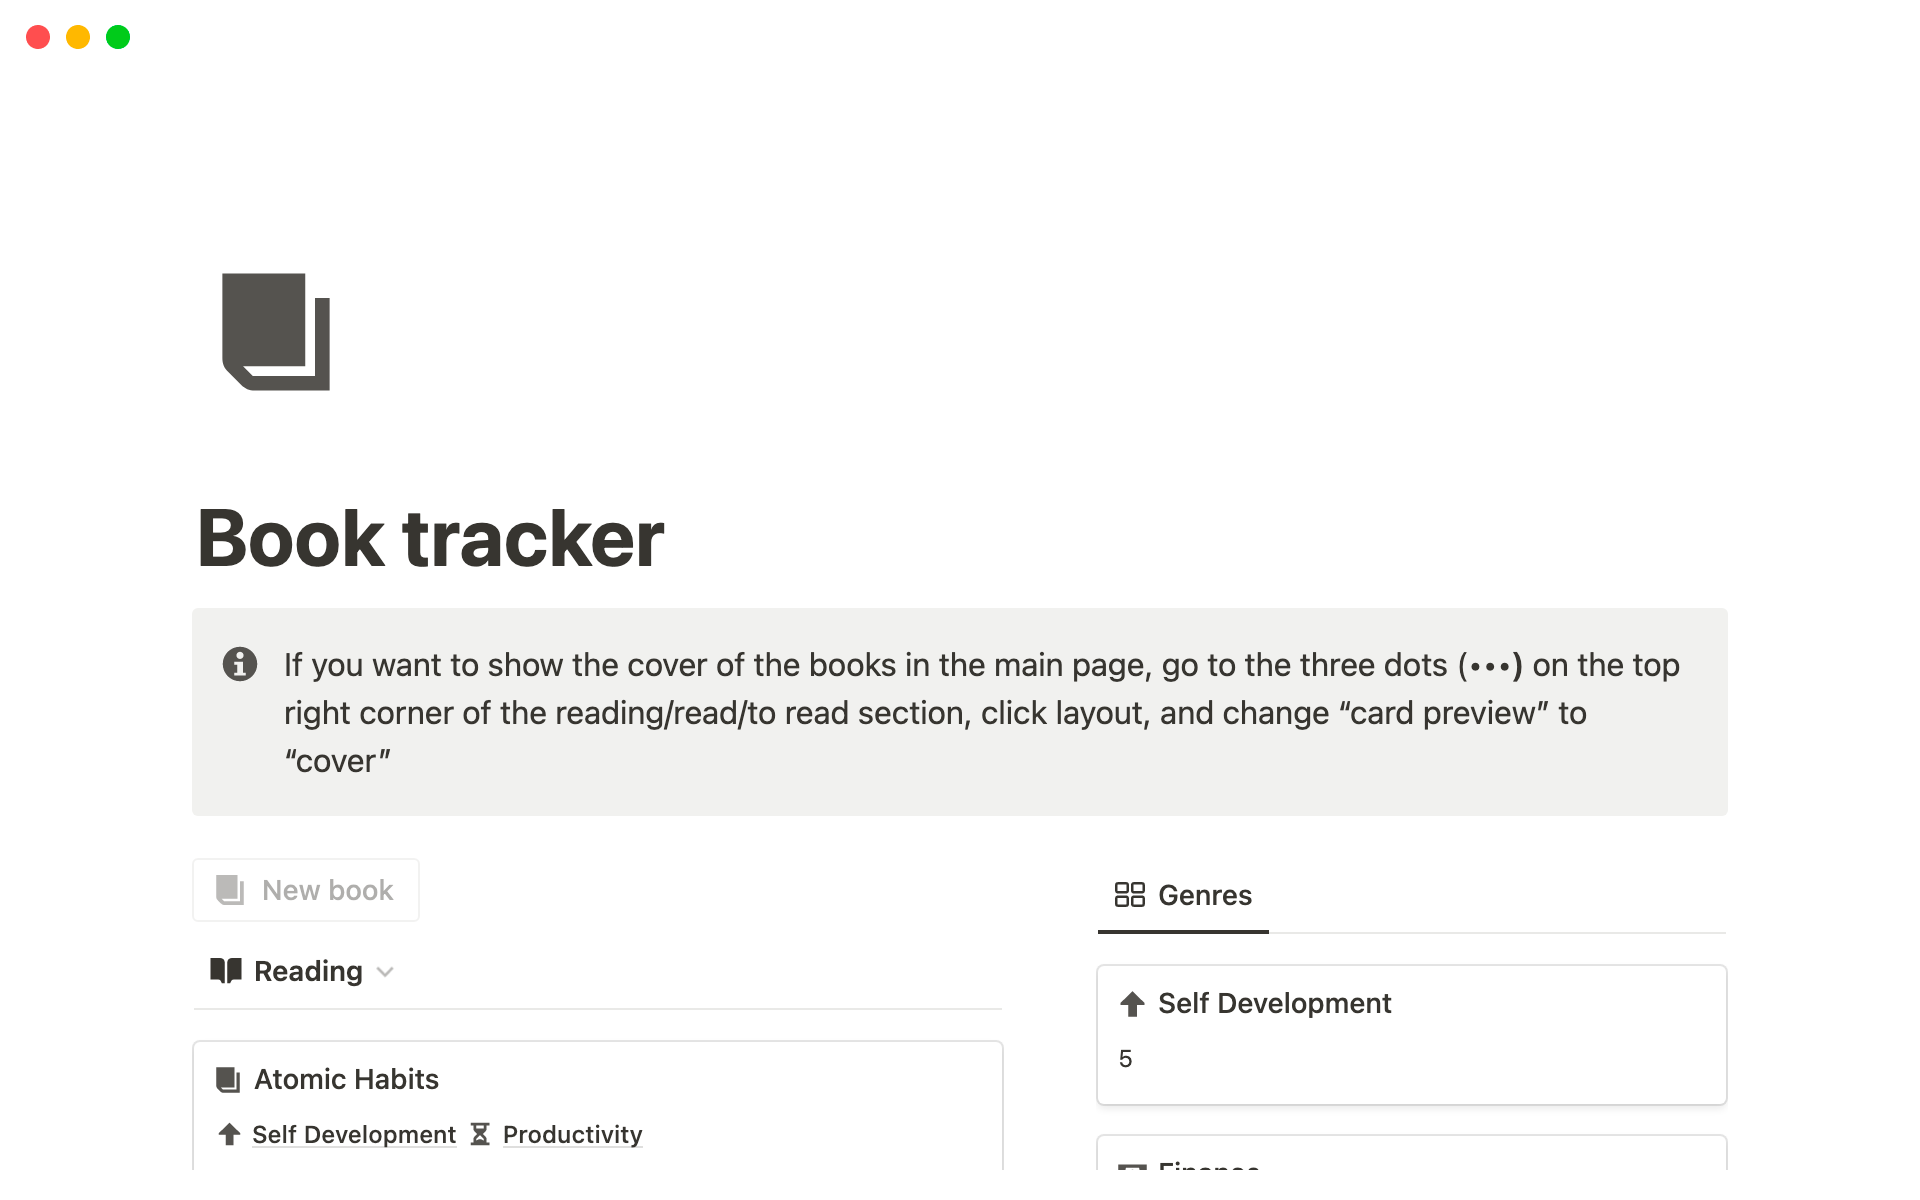 Vista previa de una plantilla para Book Tracker